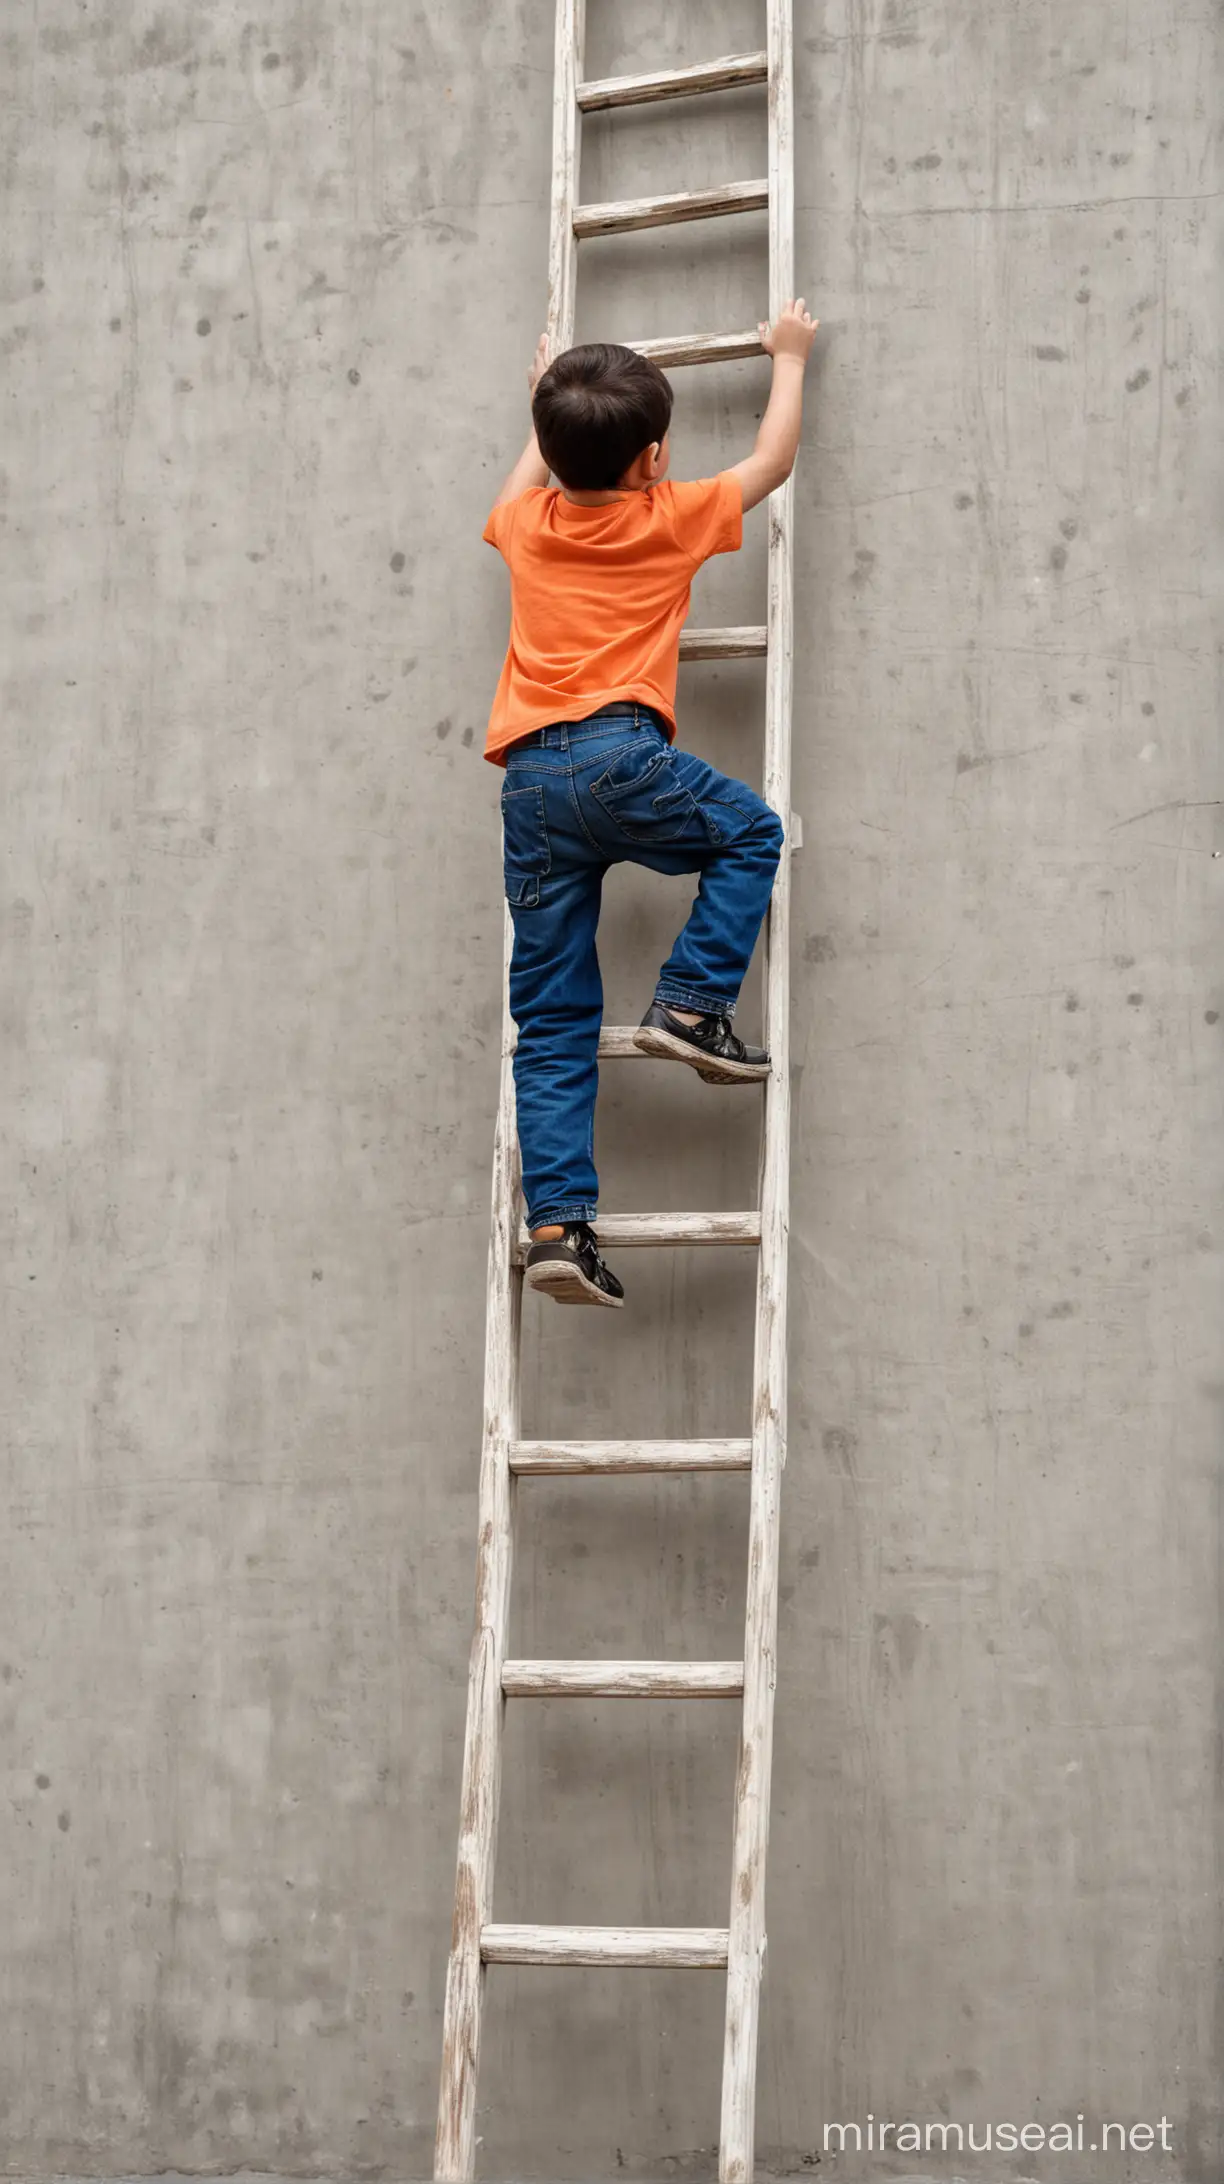 Adventurous Boy Climbing Ladder to New Heights